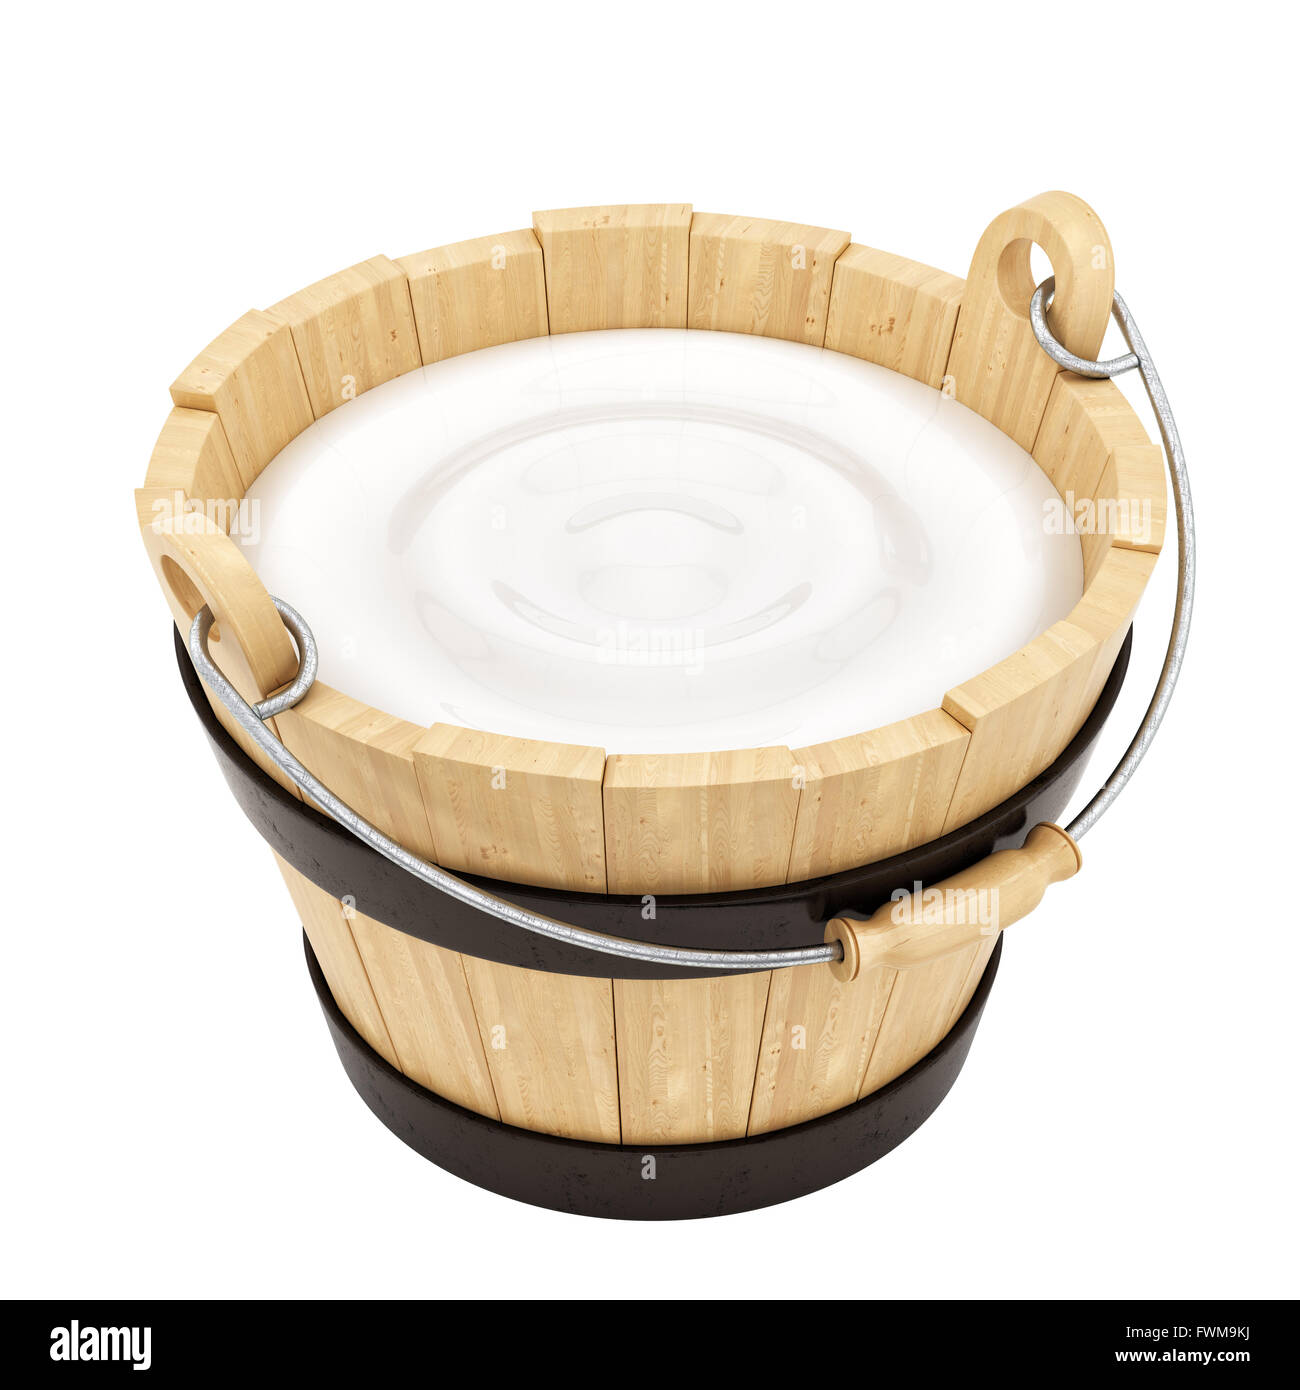 wooden milk bucket Stock Photo: 101864886 - Alamy